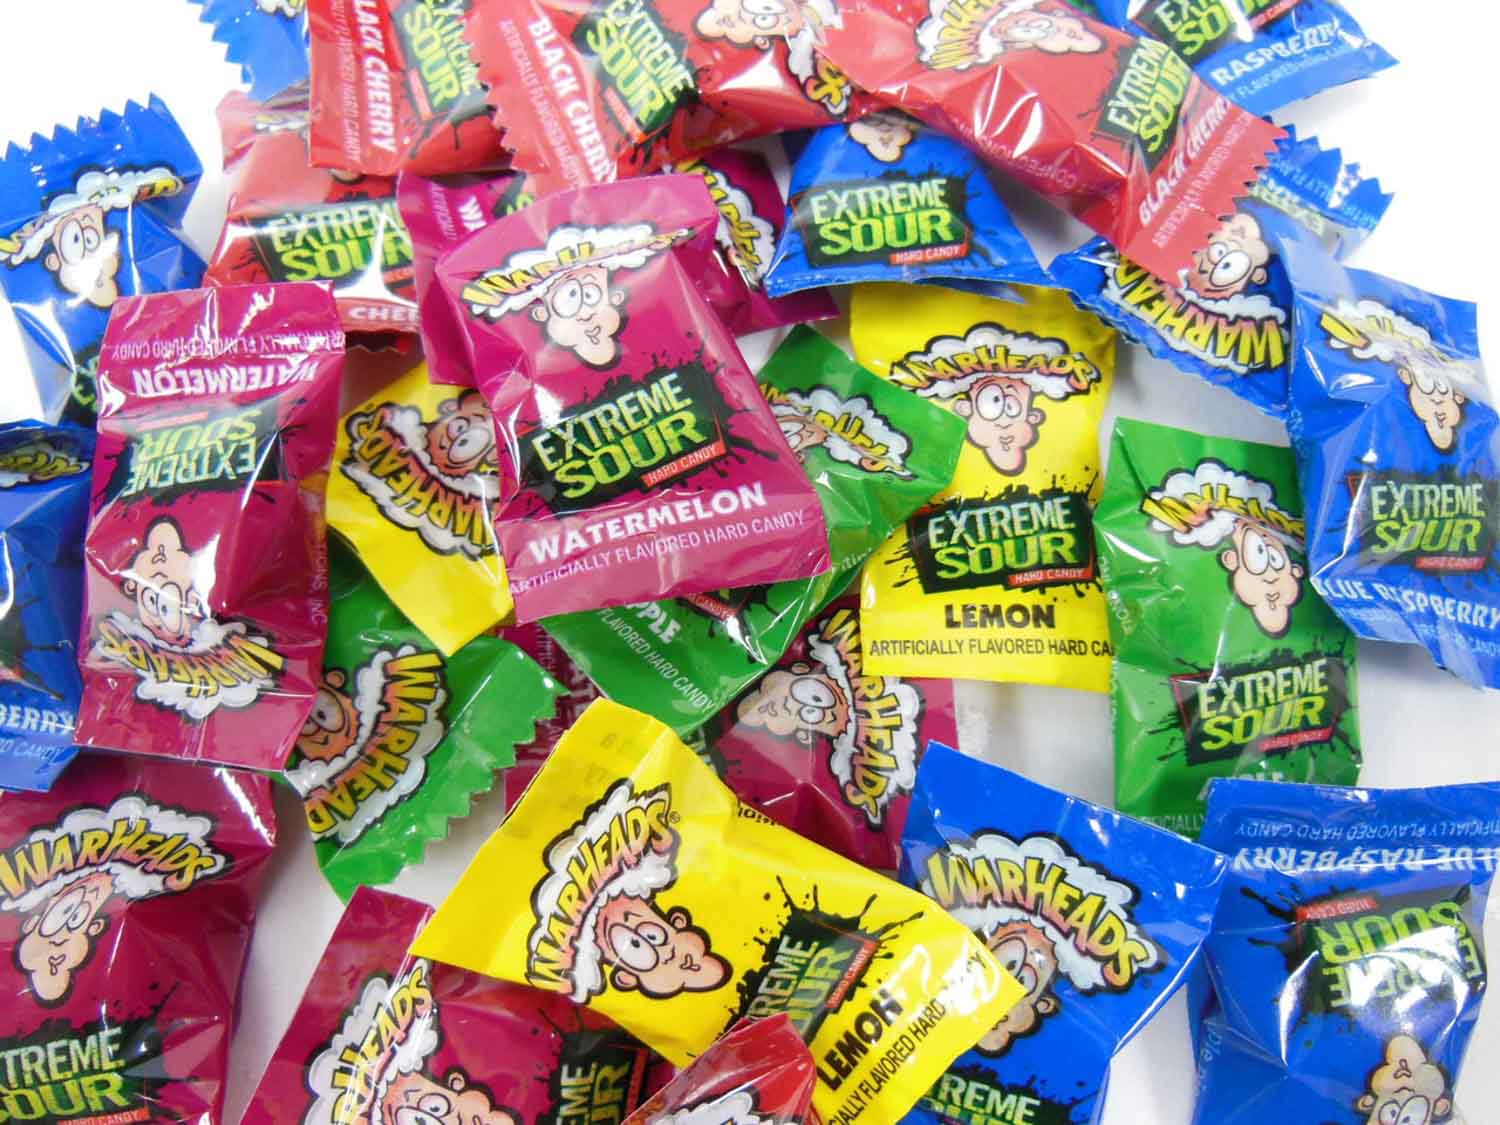 Primary School Snacks - Warheads